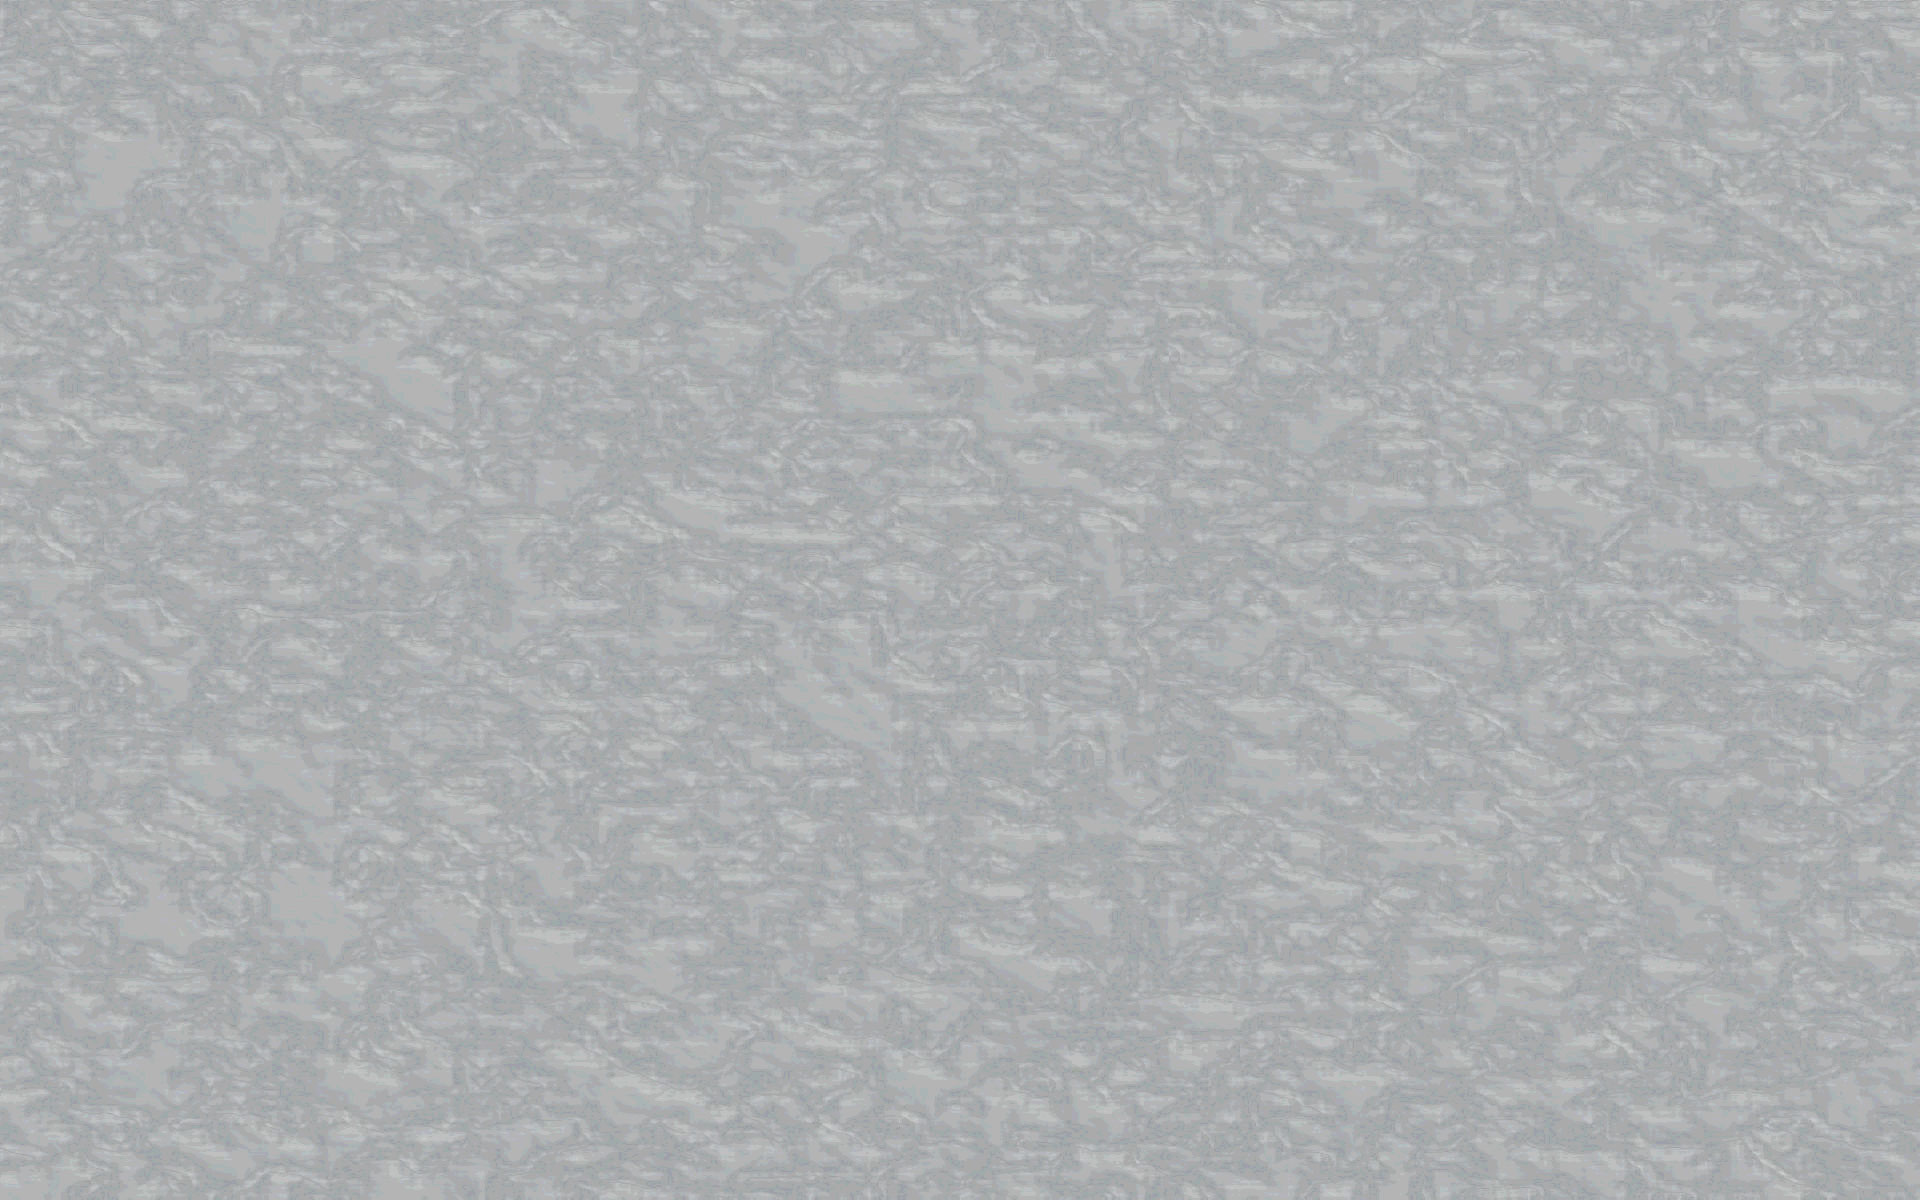 Gray Background Design Image